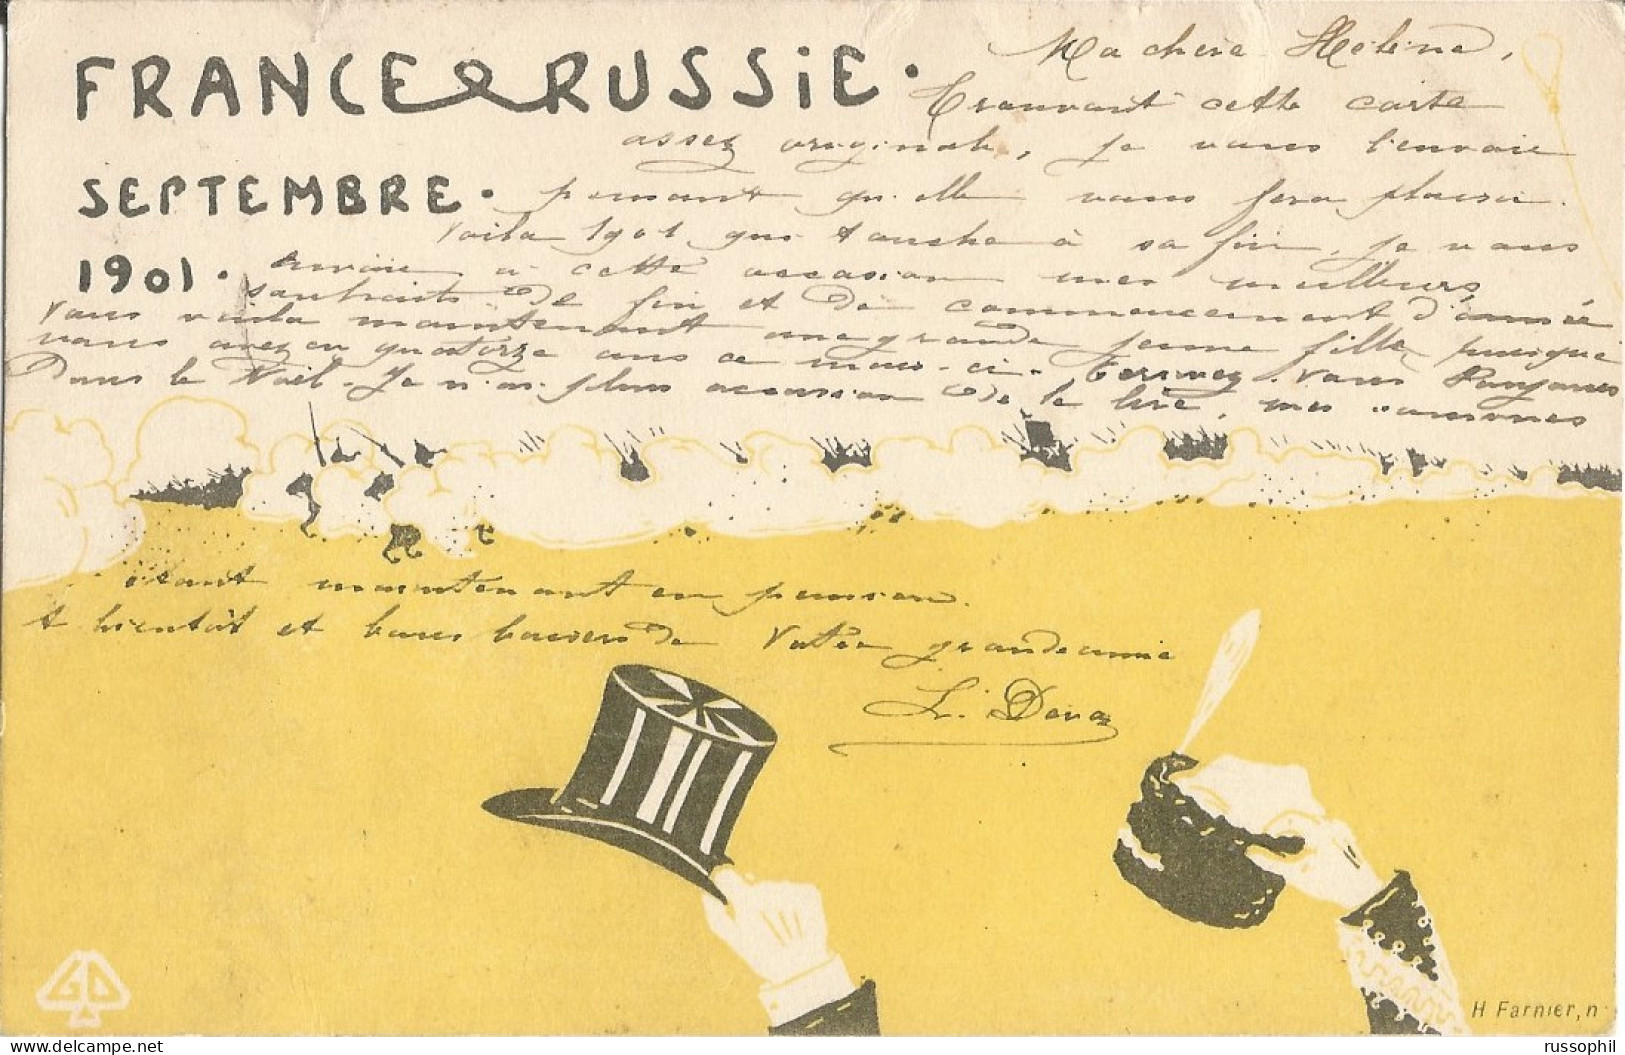 FRANCO RUSSIAN ALLIANCE - FRANCE RUSSIE SEPTEMBRE 1901 - H. FARNIER N° 6 - 1901 - Events